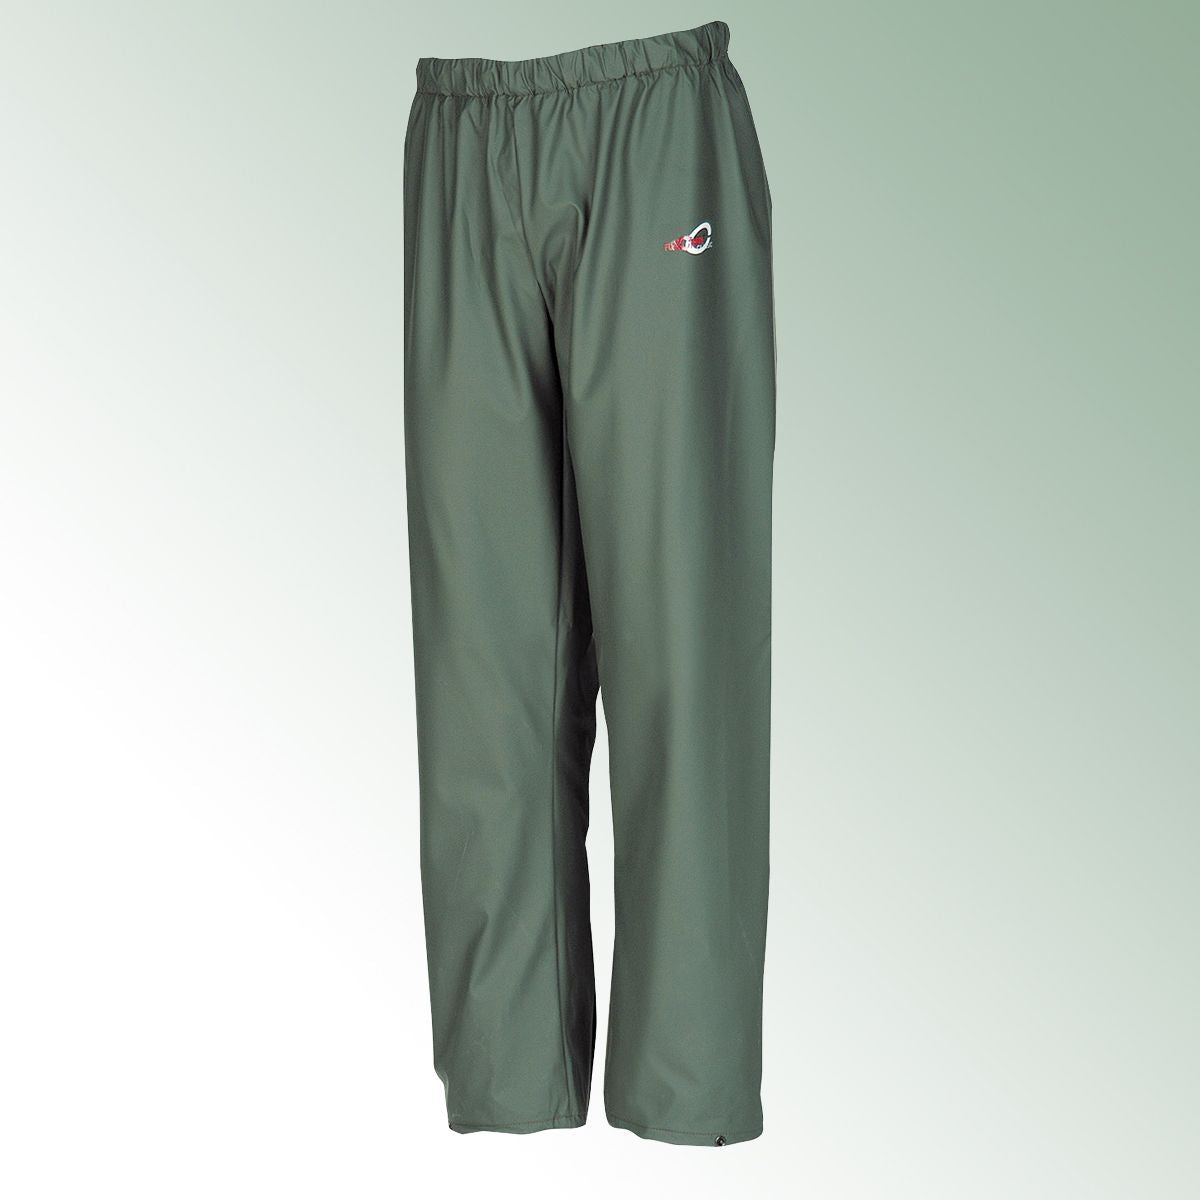 Rain trousers Flexothane size 2XL - olive green model 4500